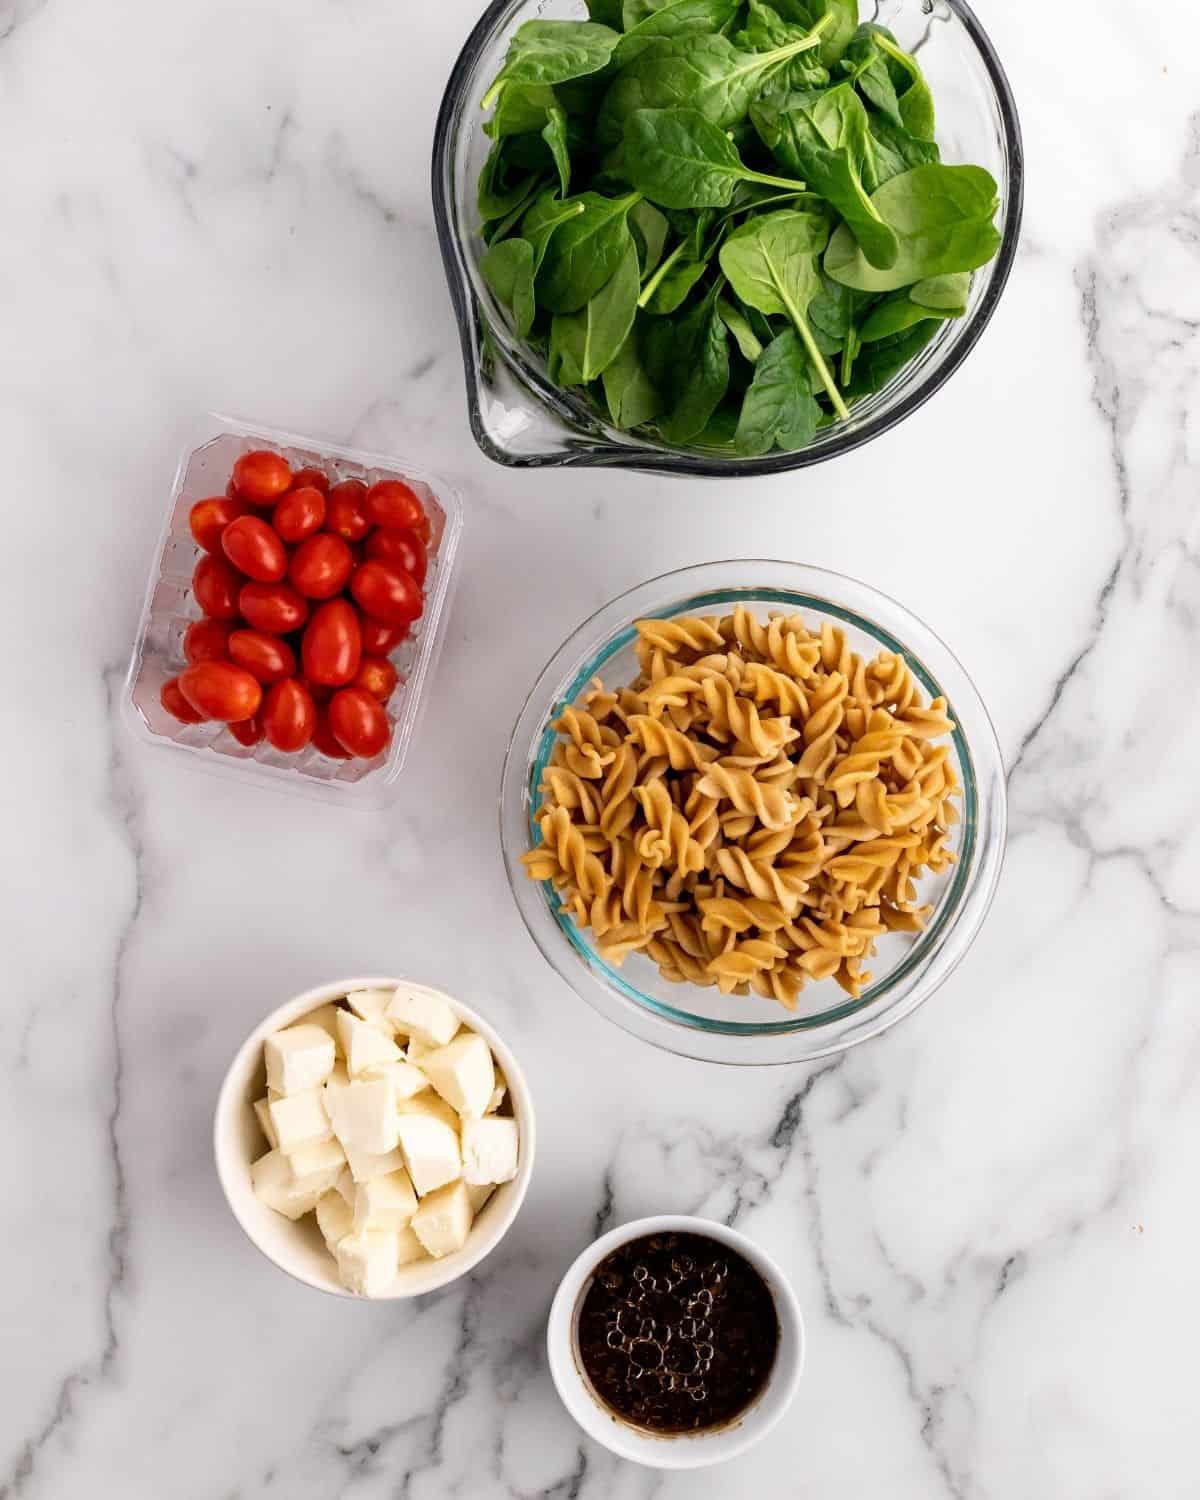 ingredients to make spinach pasta salad in a jar.